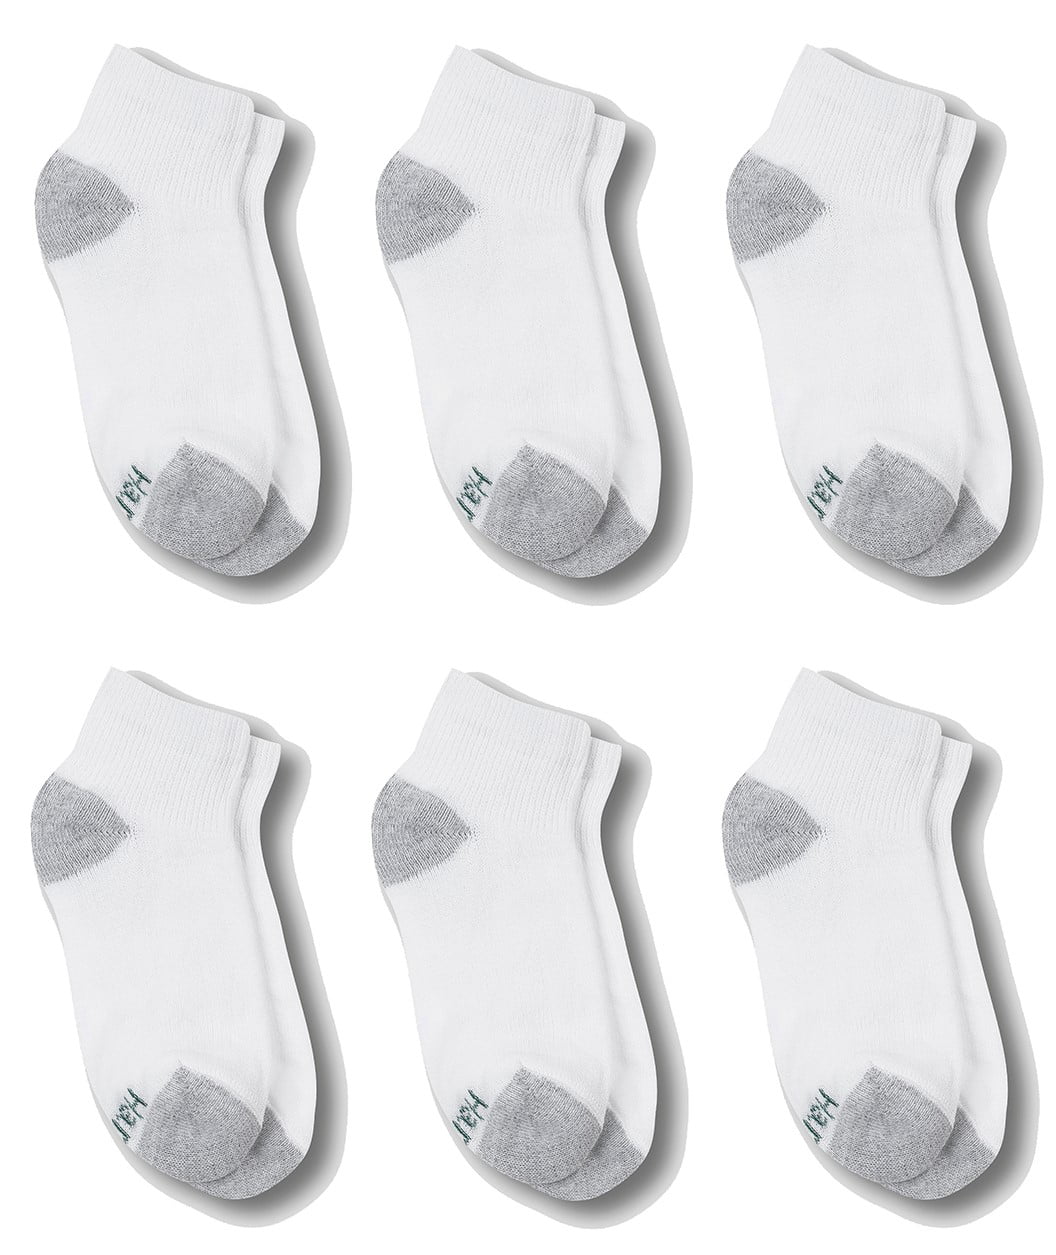 Hanes Toddler Socks Size Chart